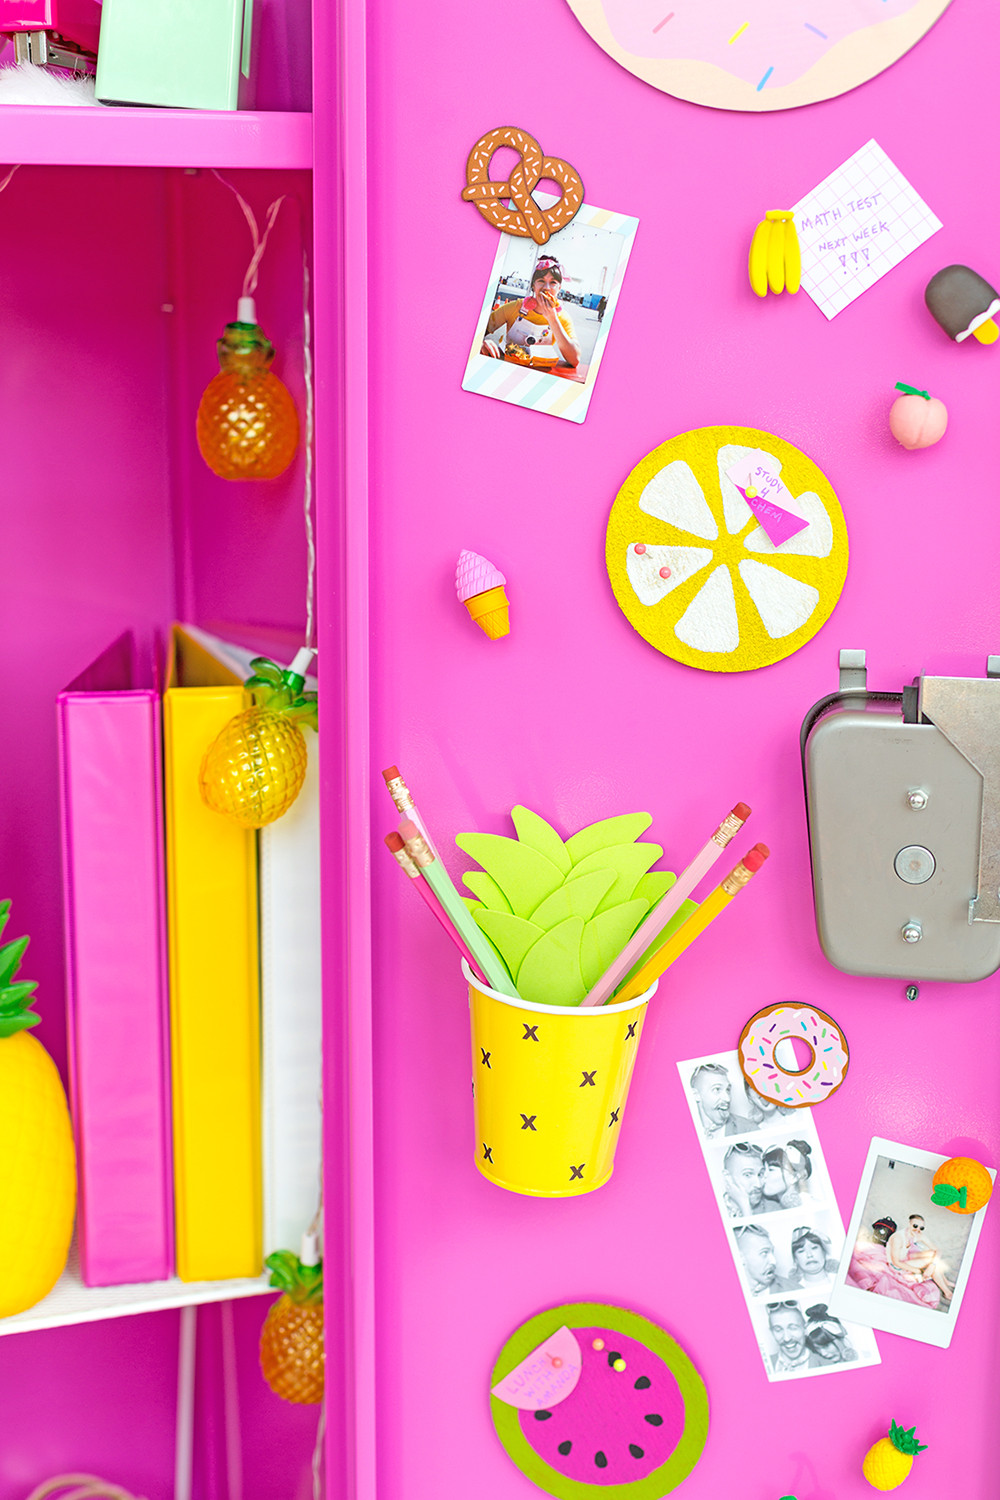 Best ideas about DIY Locker Decor
. Save or Pin Colorful DIY Locker Decoration Ideas Now.